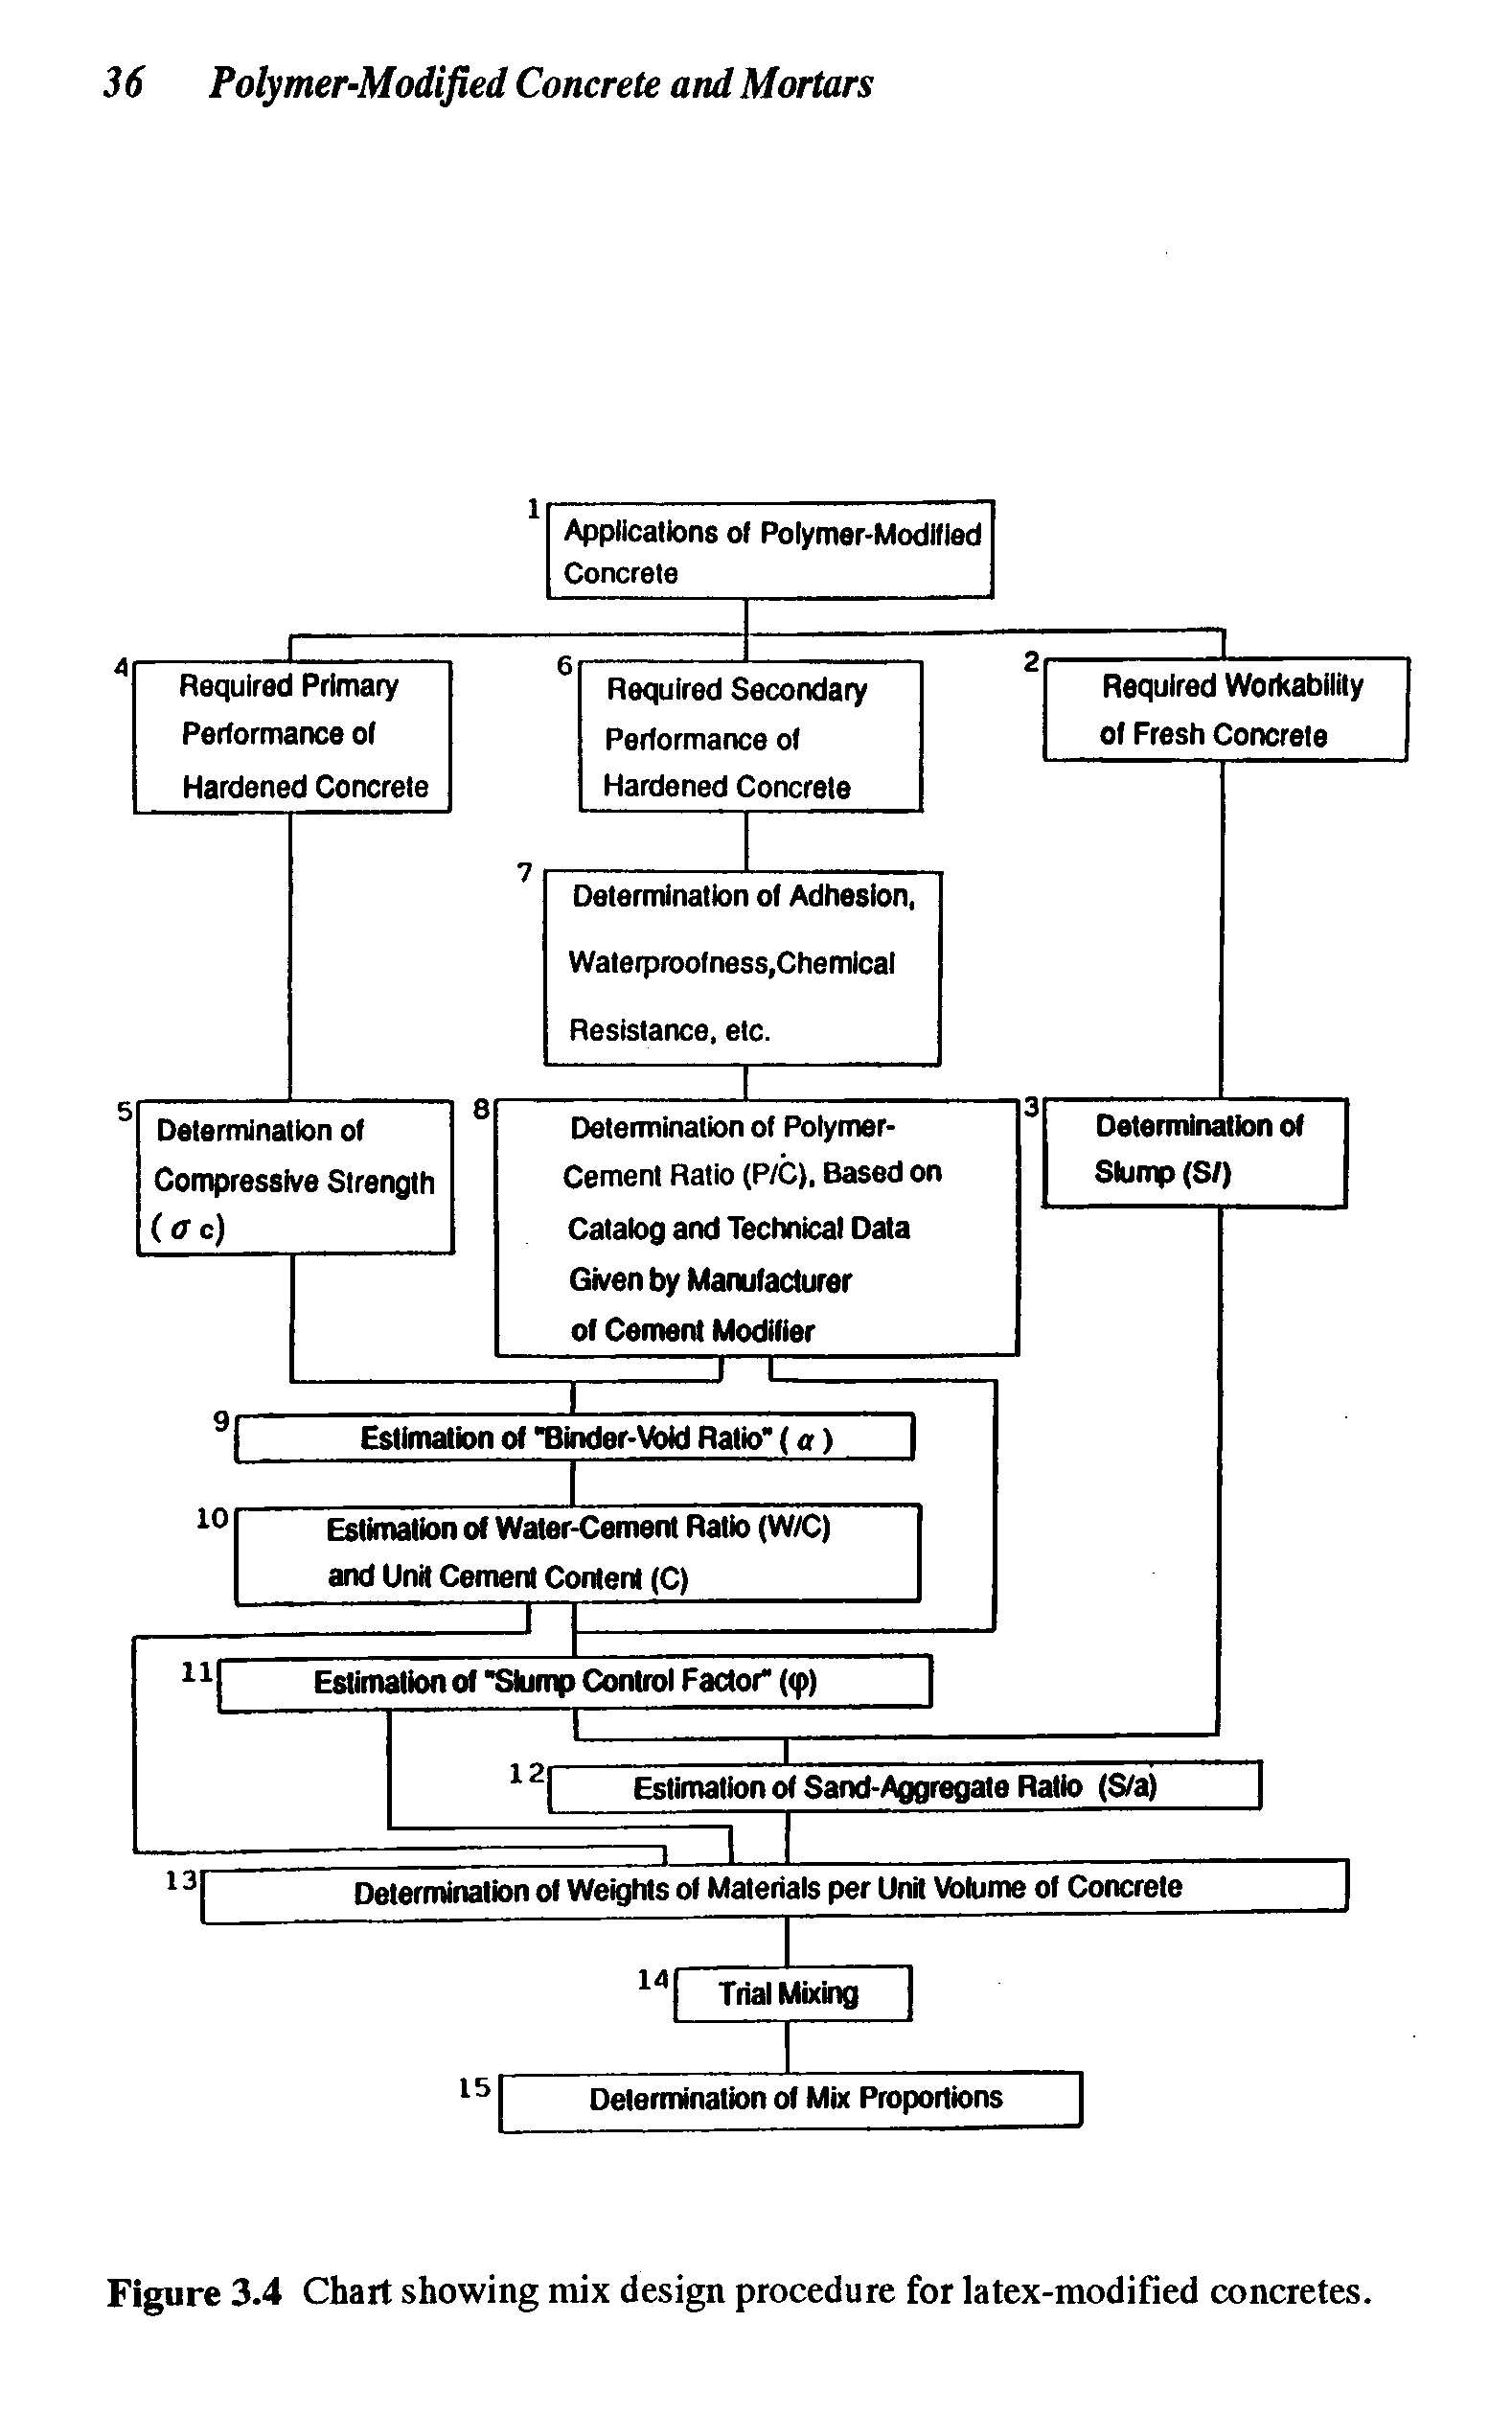 Figure 3.4 Chart showing mix design procedure for latex-modified concretes.